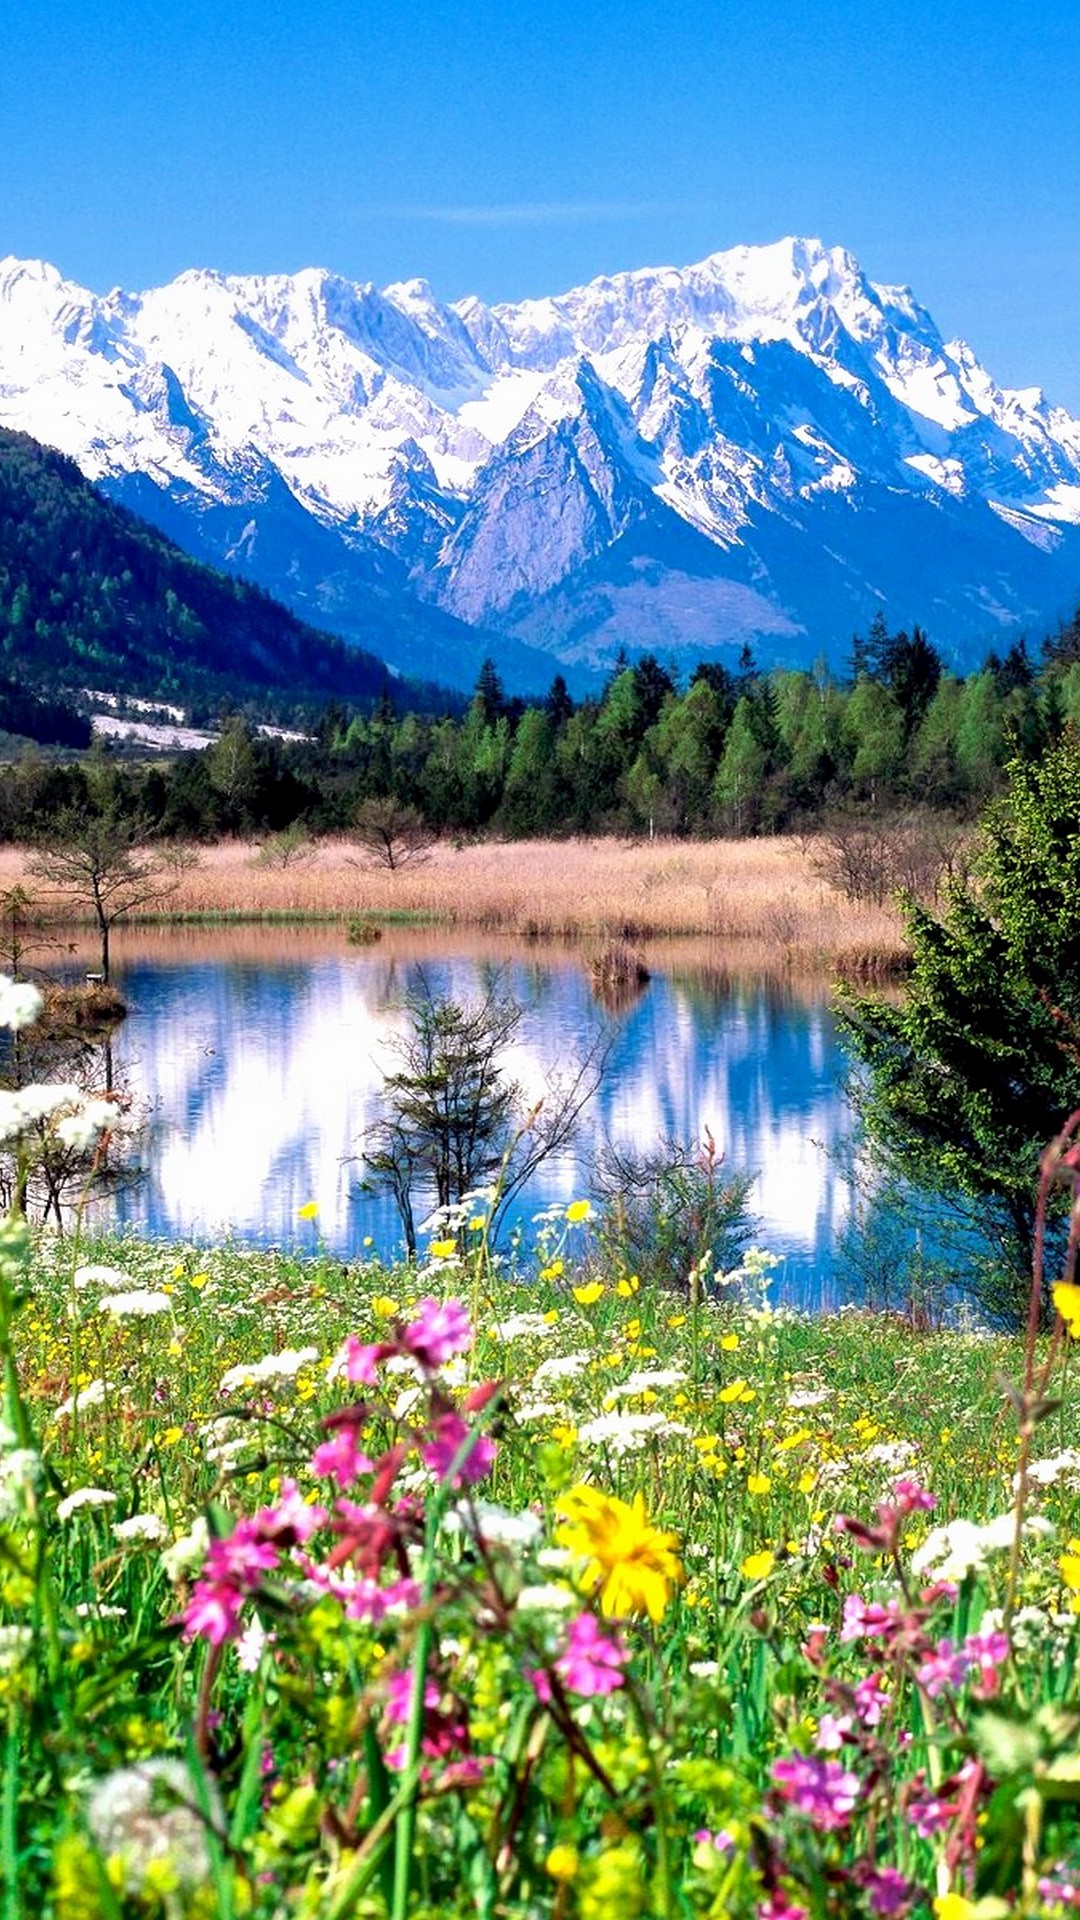 spring iphone wallpaper,natural landscape,nature,mountain,wilderness,mountainous landforms